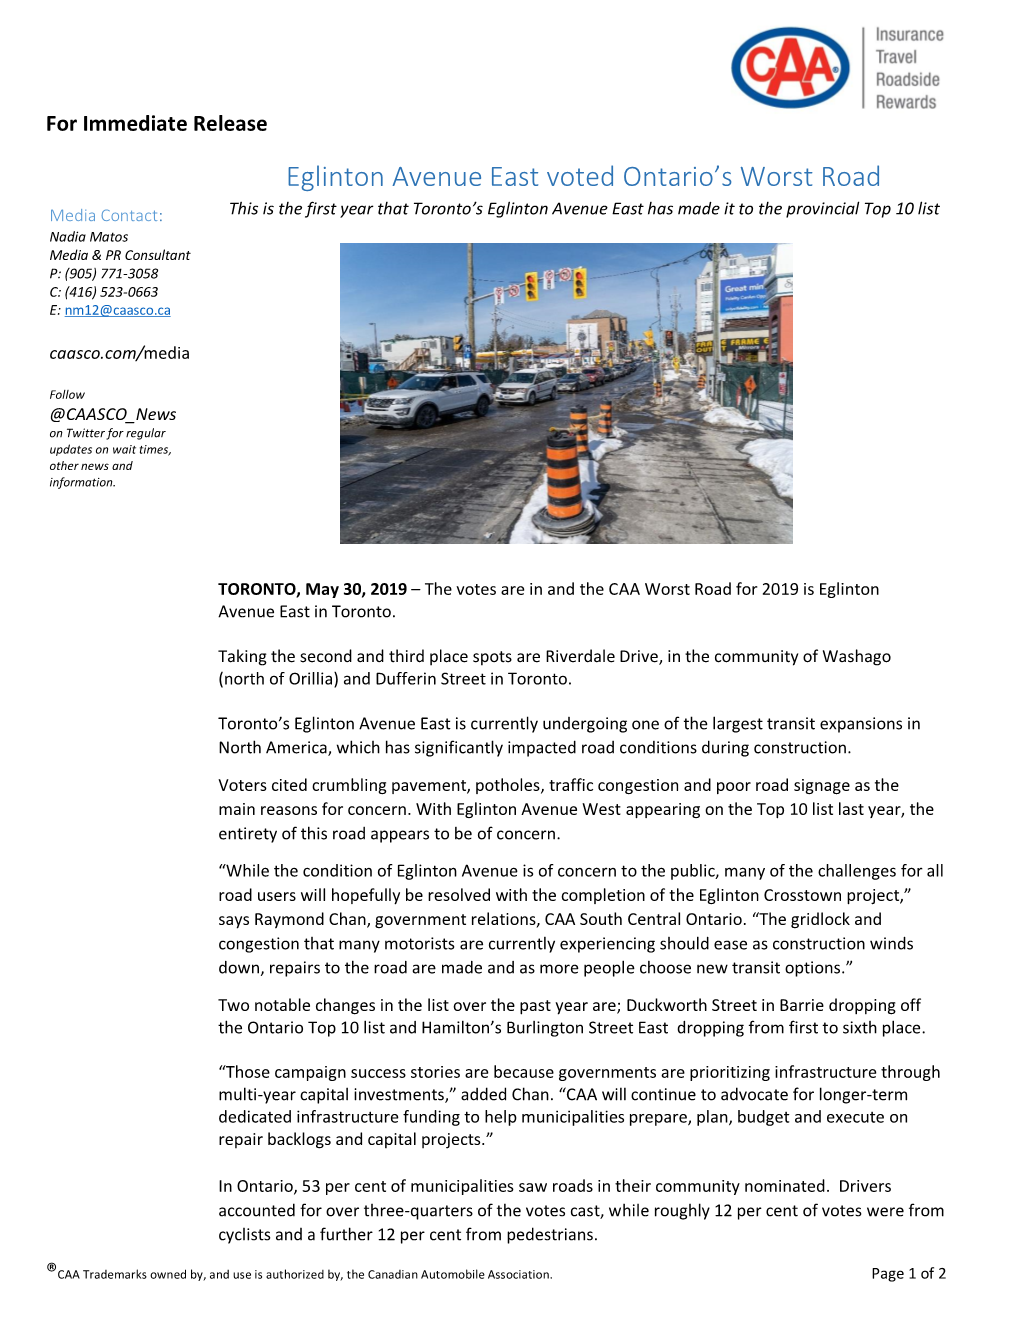 Eglinton Avenue East Voted Ontario's Worst Road